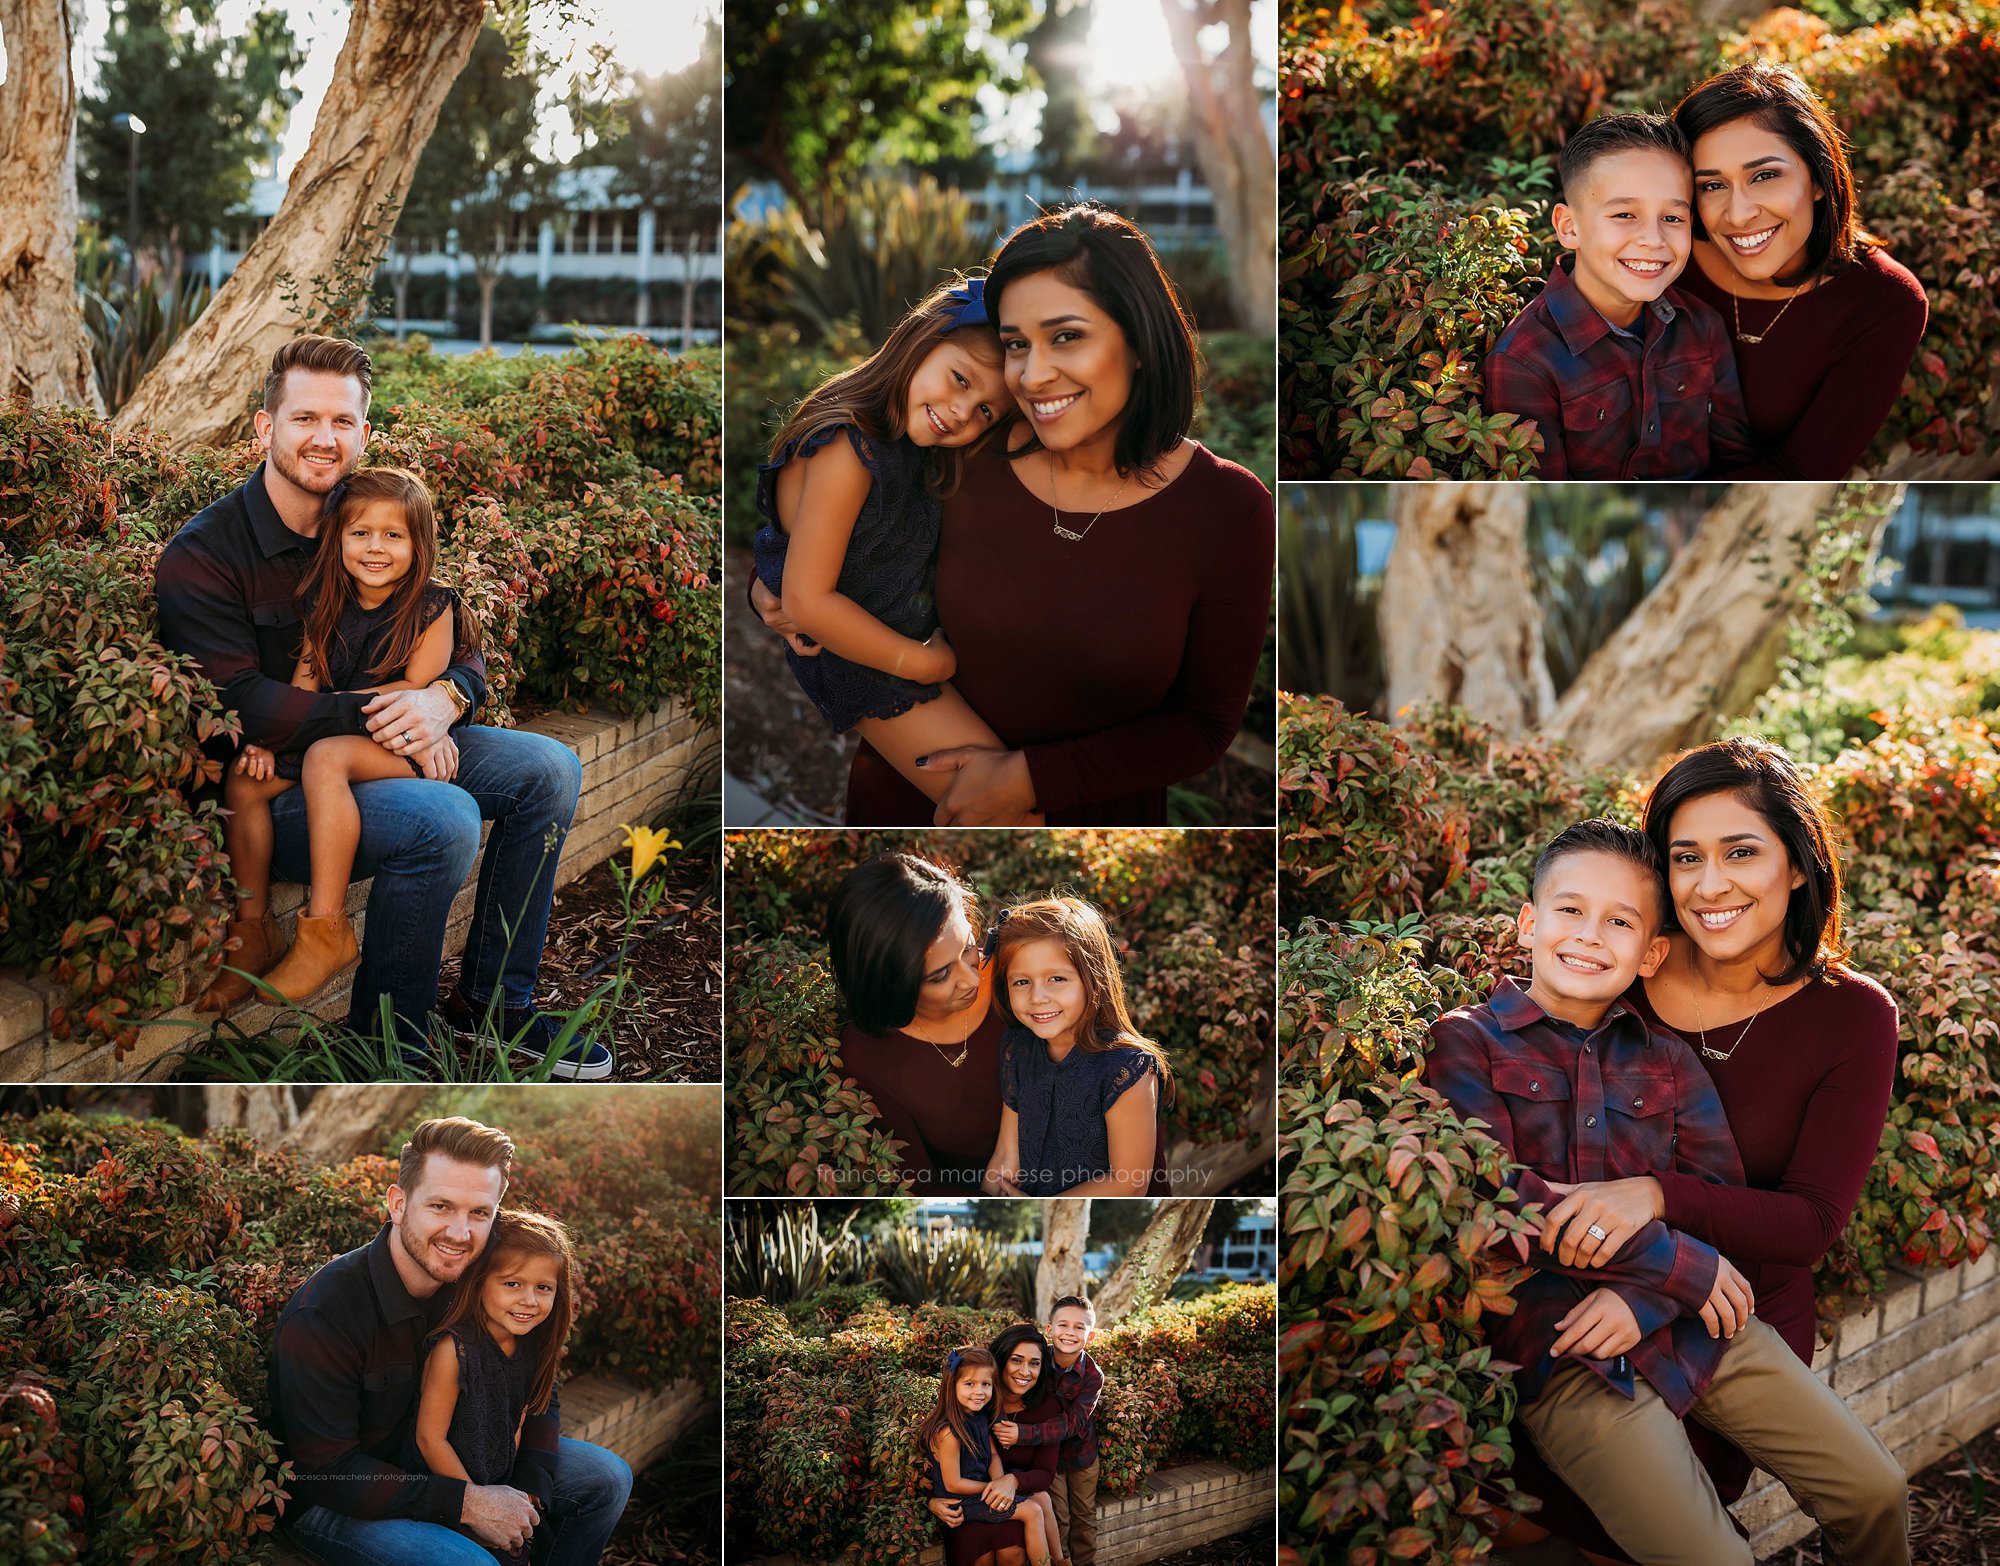 Thomas Family Francesca Marchese Photography Long Beach Orange County family photographer fall foliage